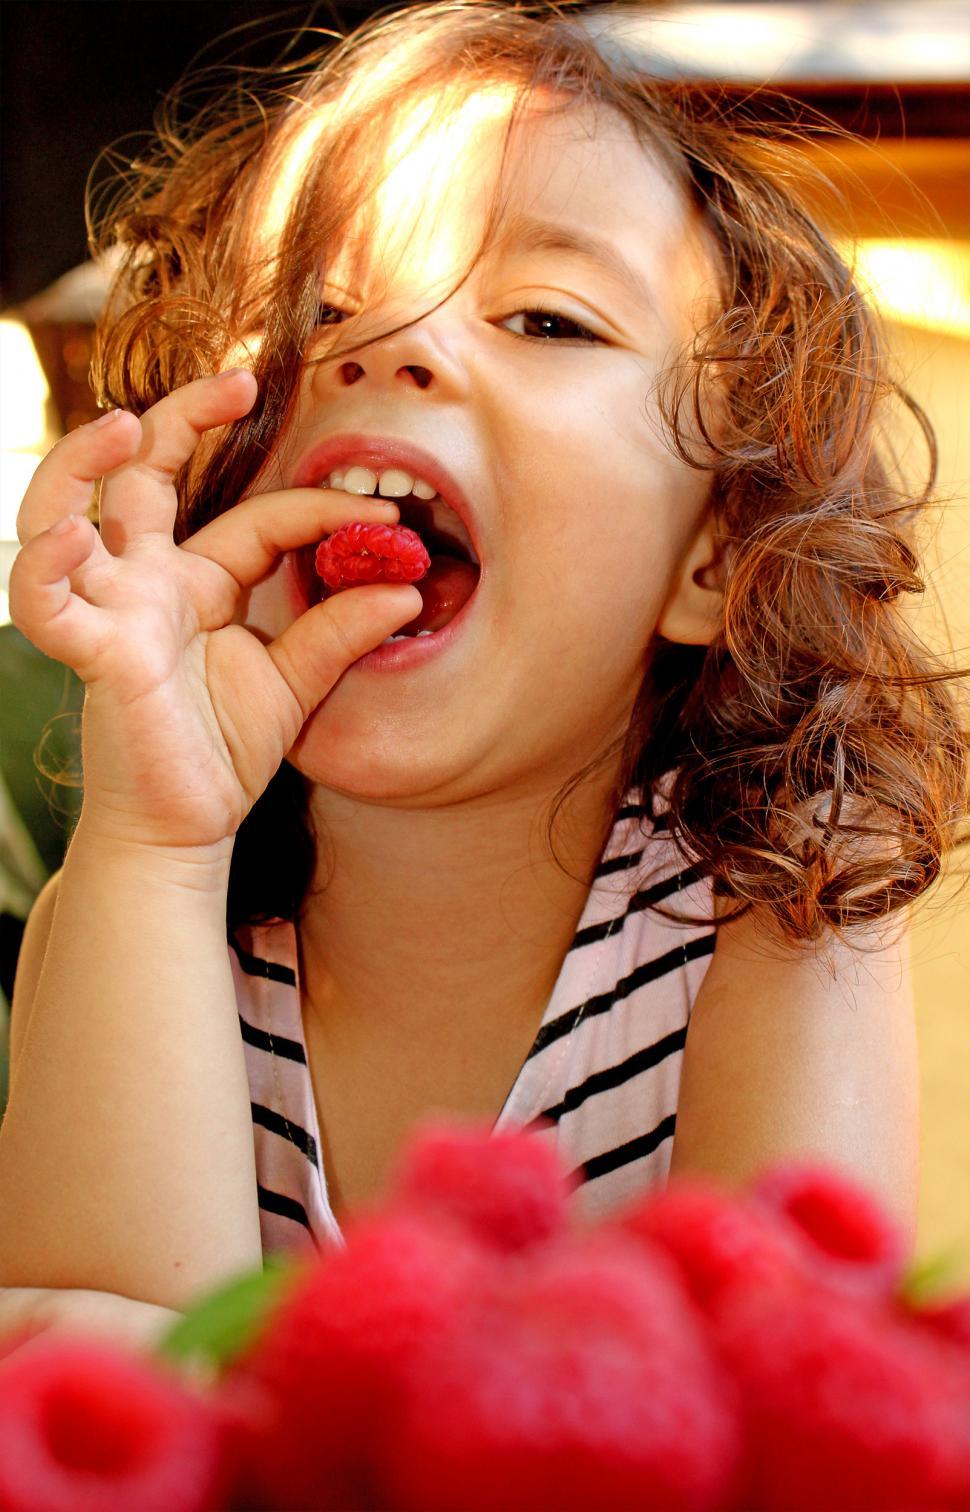 Free Image of Child eating raspberries 